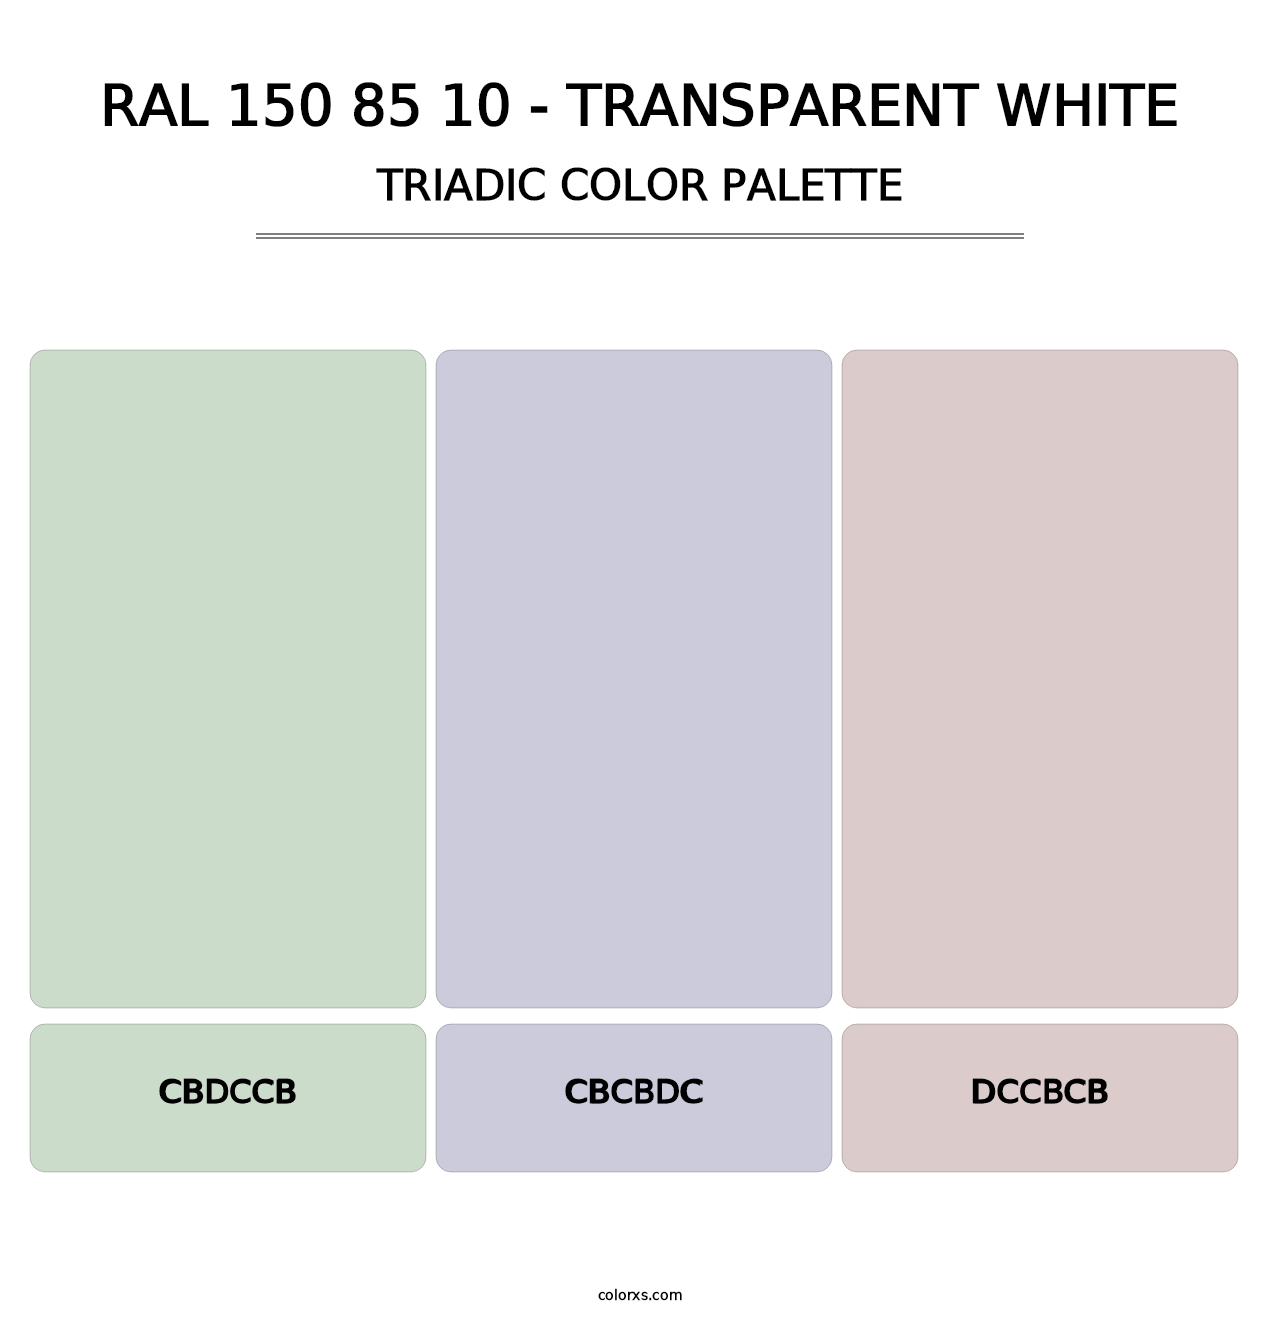 RAL 150 85 10 - Transparent White - Triadic Color Palette